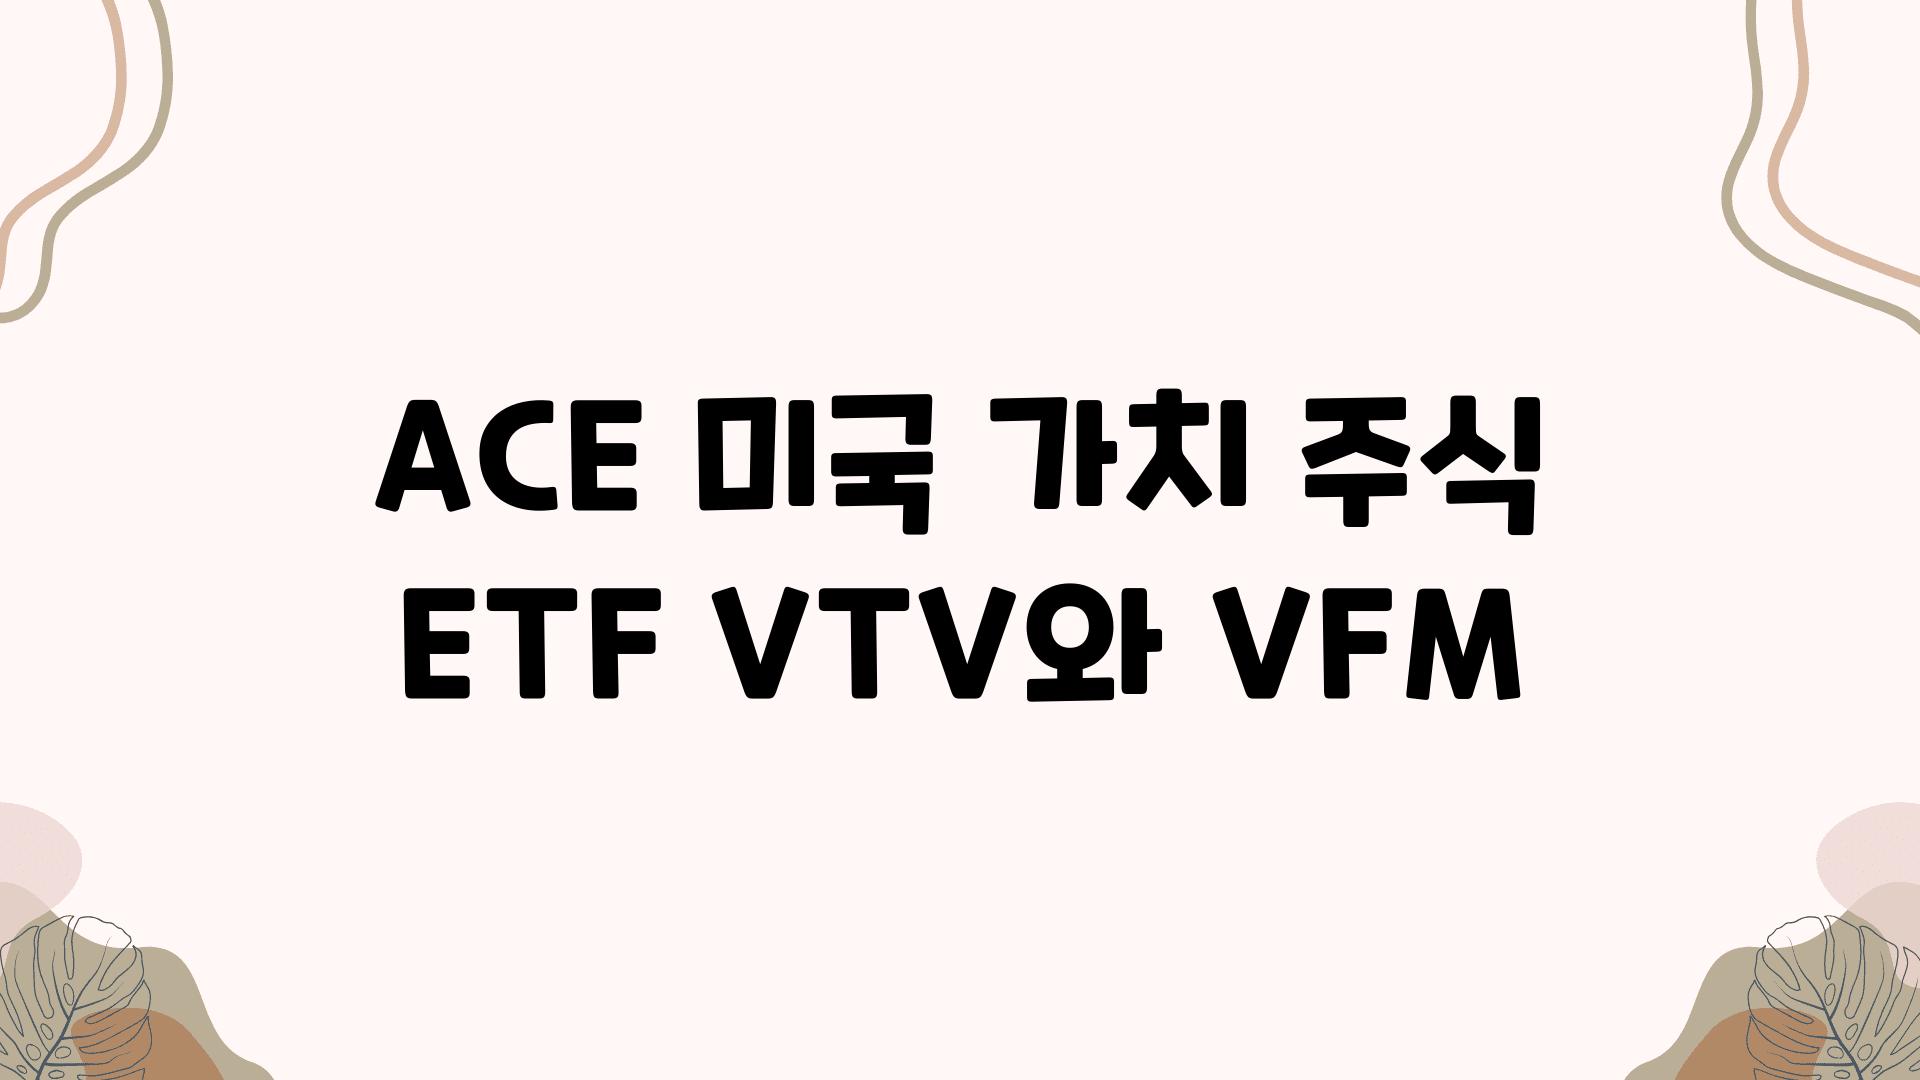 ACE 미국 가치 주식 ETF VTV와 VFM